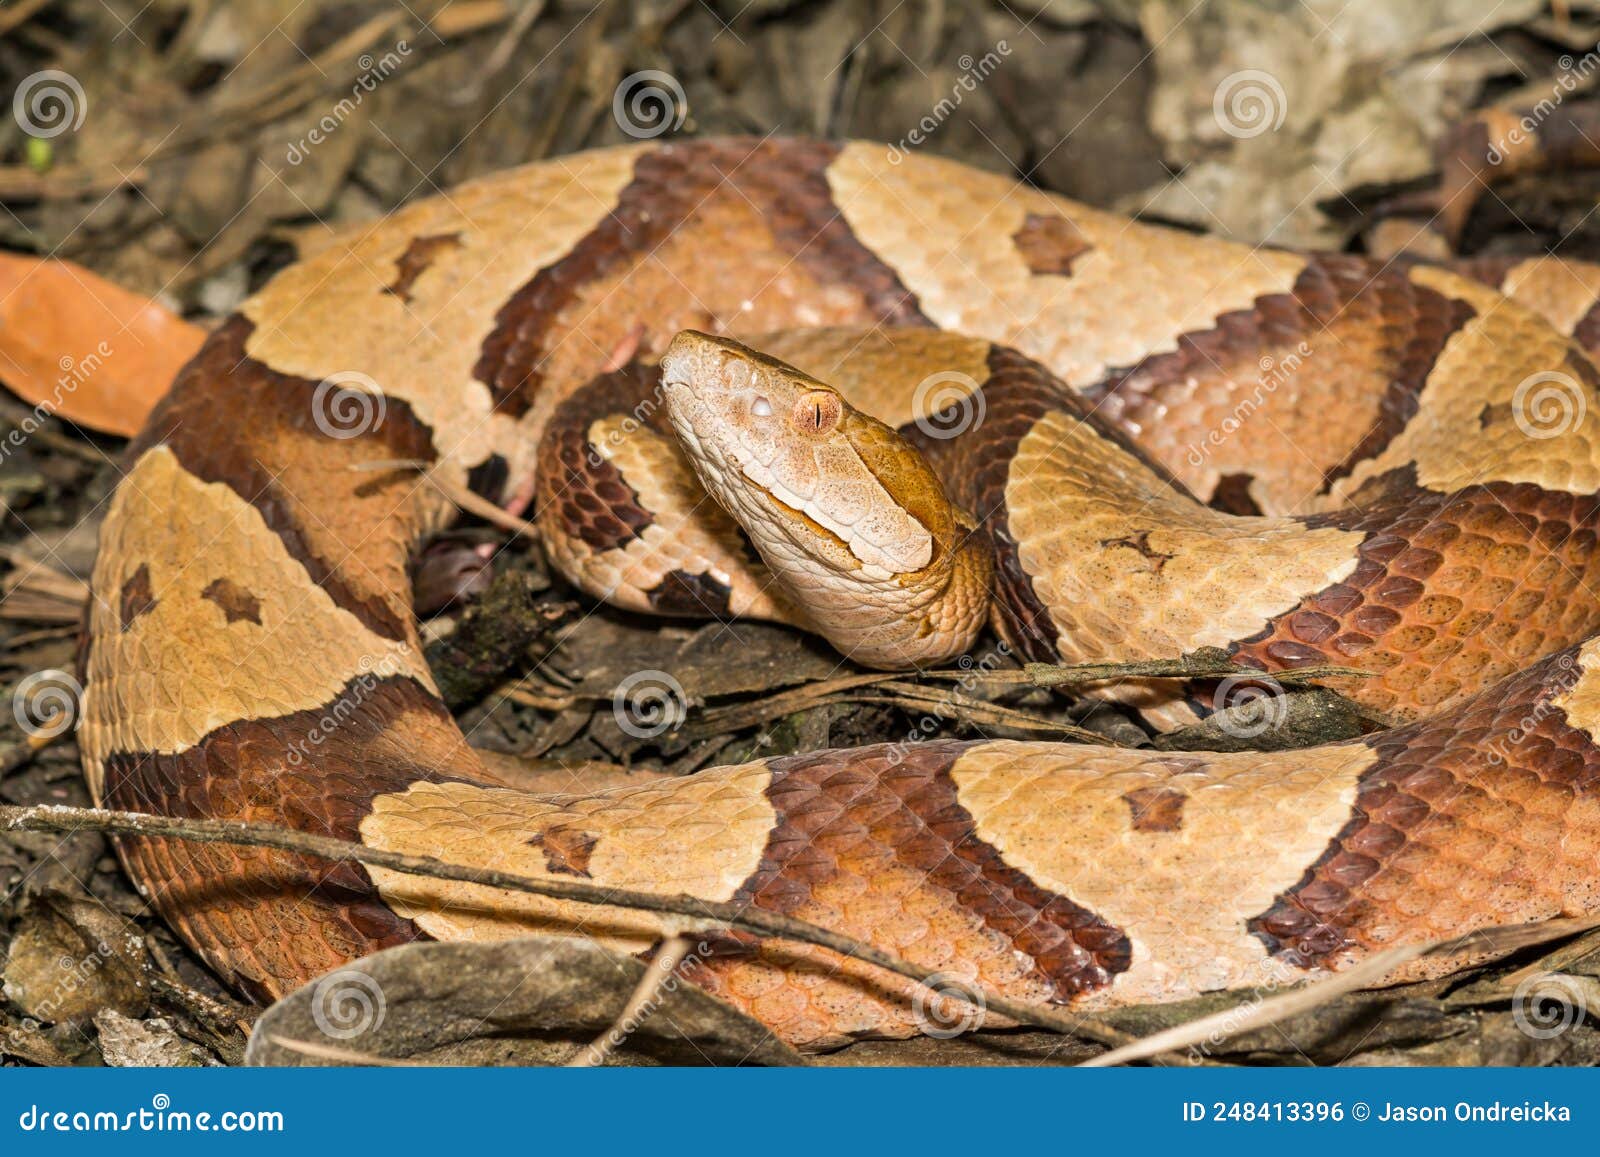 eastern copperhead snake in north carolina - agkistrodon contortrix